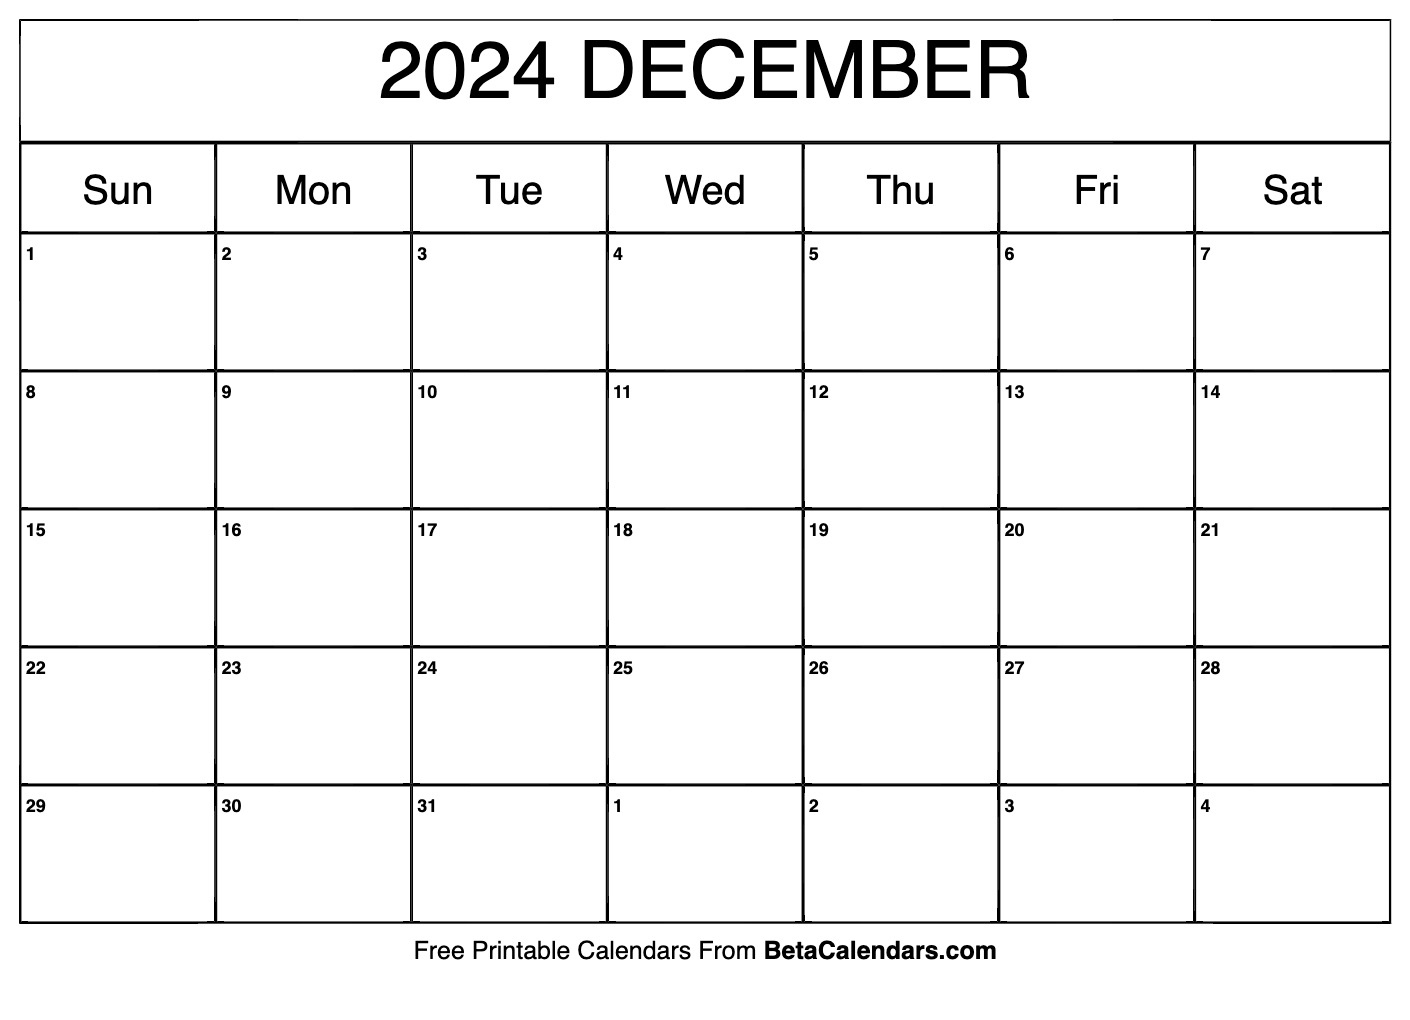 Free Printable December 2024 Calendar | Printable Calendar Dec 2024